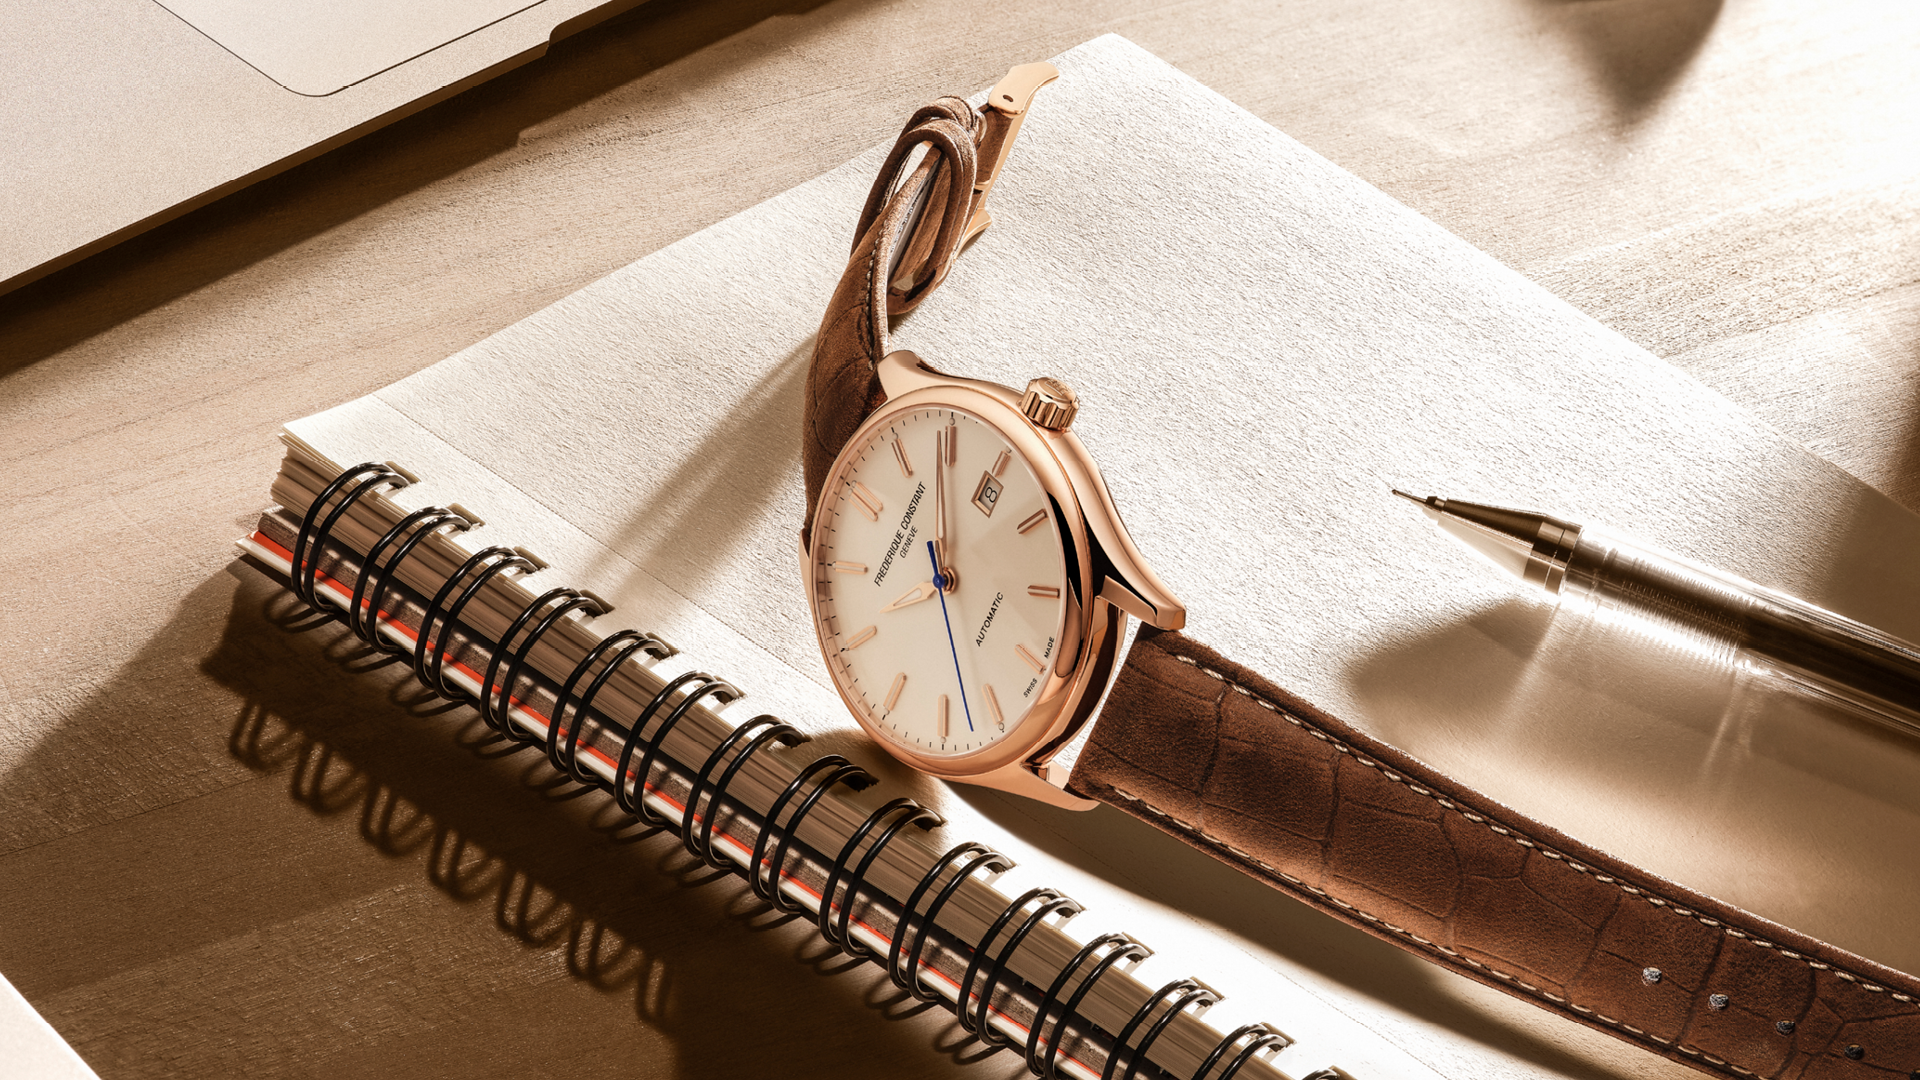 Frederique Constant Classics collection. Swiss Made Manufacture, Automatic, Hybrid, Quartz watches for ladies & men.